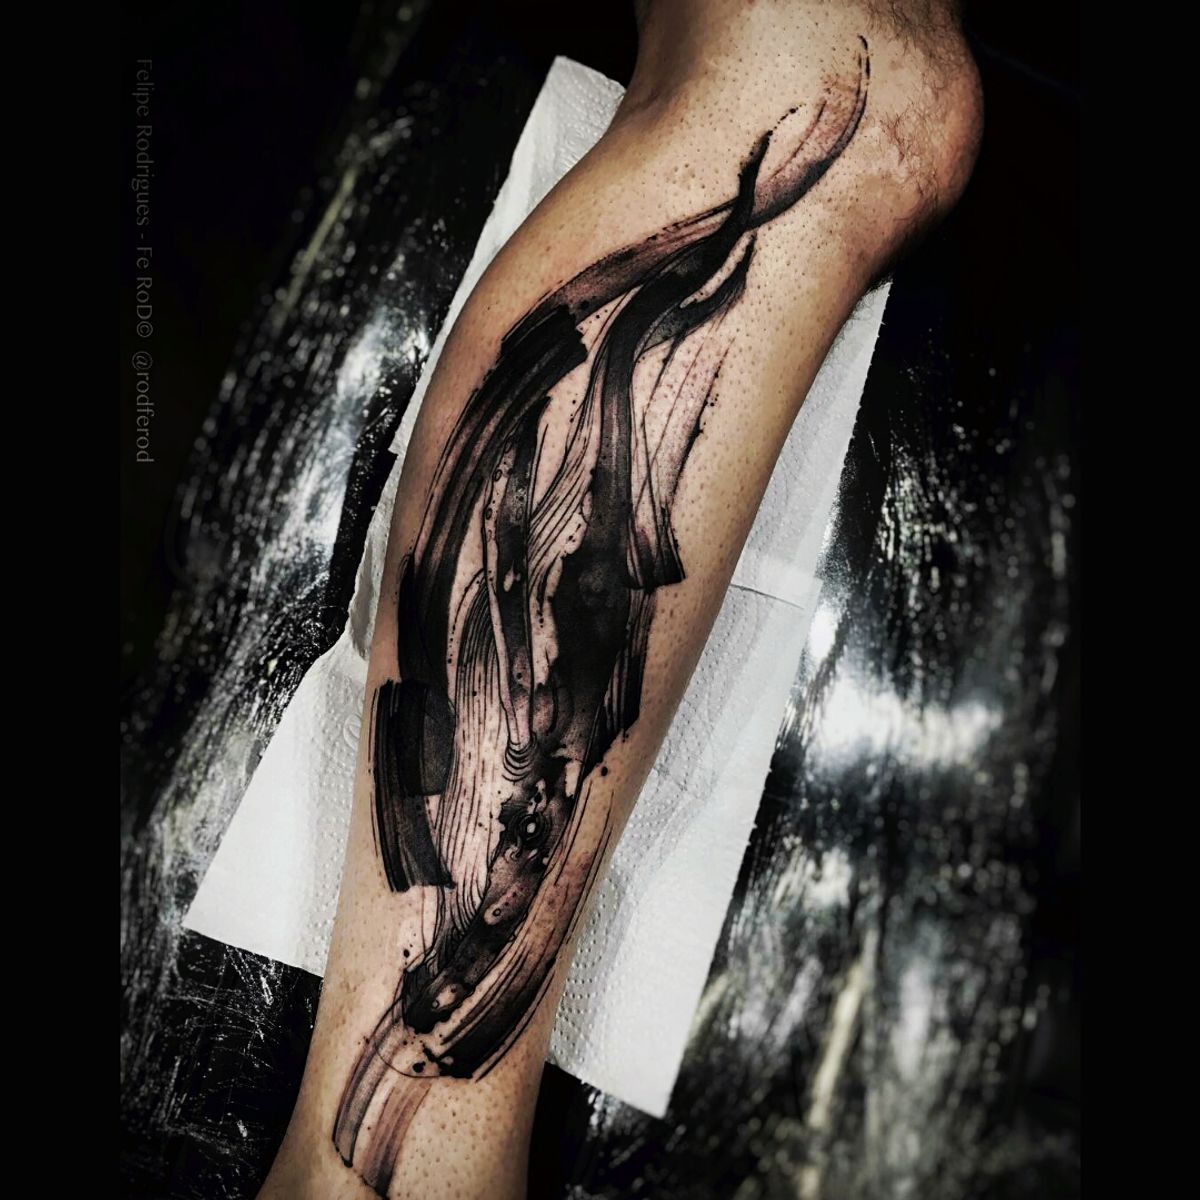 Tattoo uploaded by Orla • Seriously sick black & grey leg sleeve tattoos  #dreamtattoo #mydreamtattoo • Tattoodo